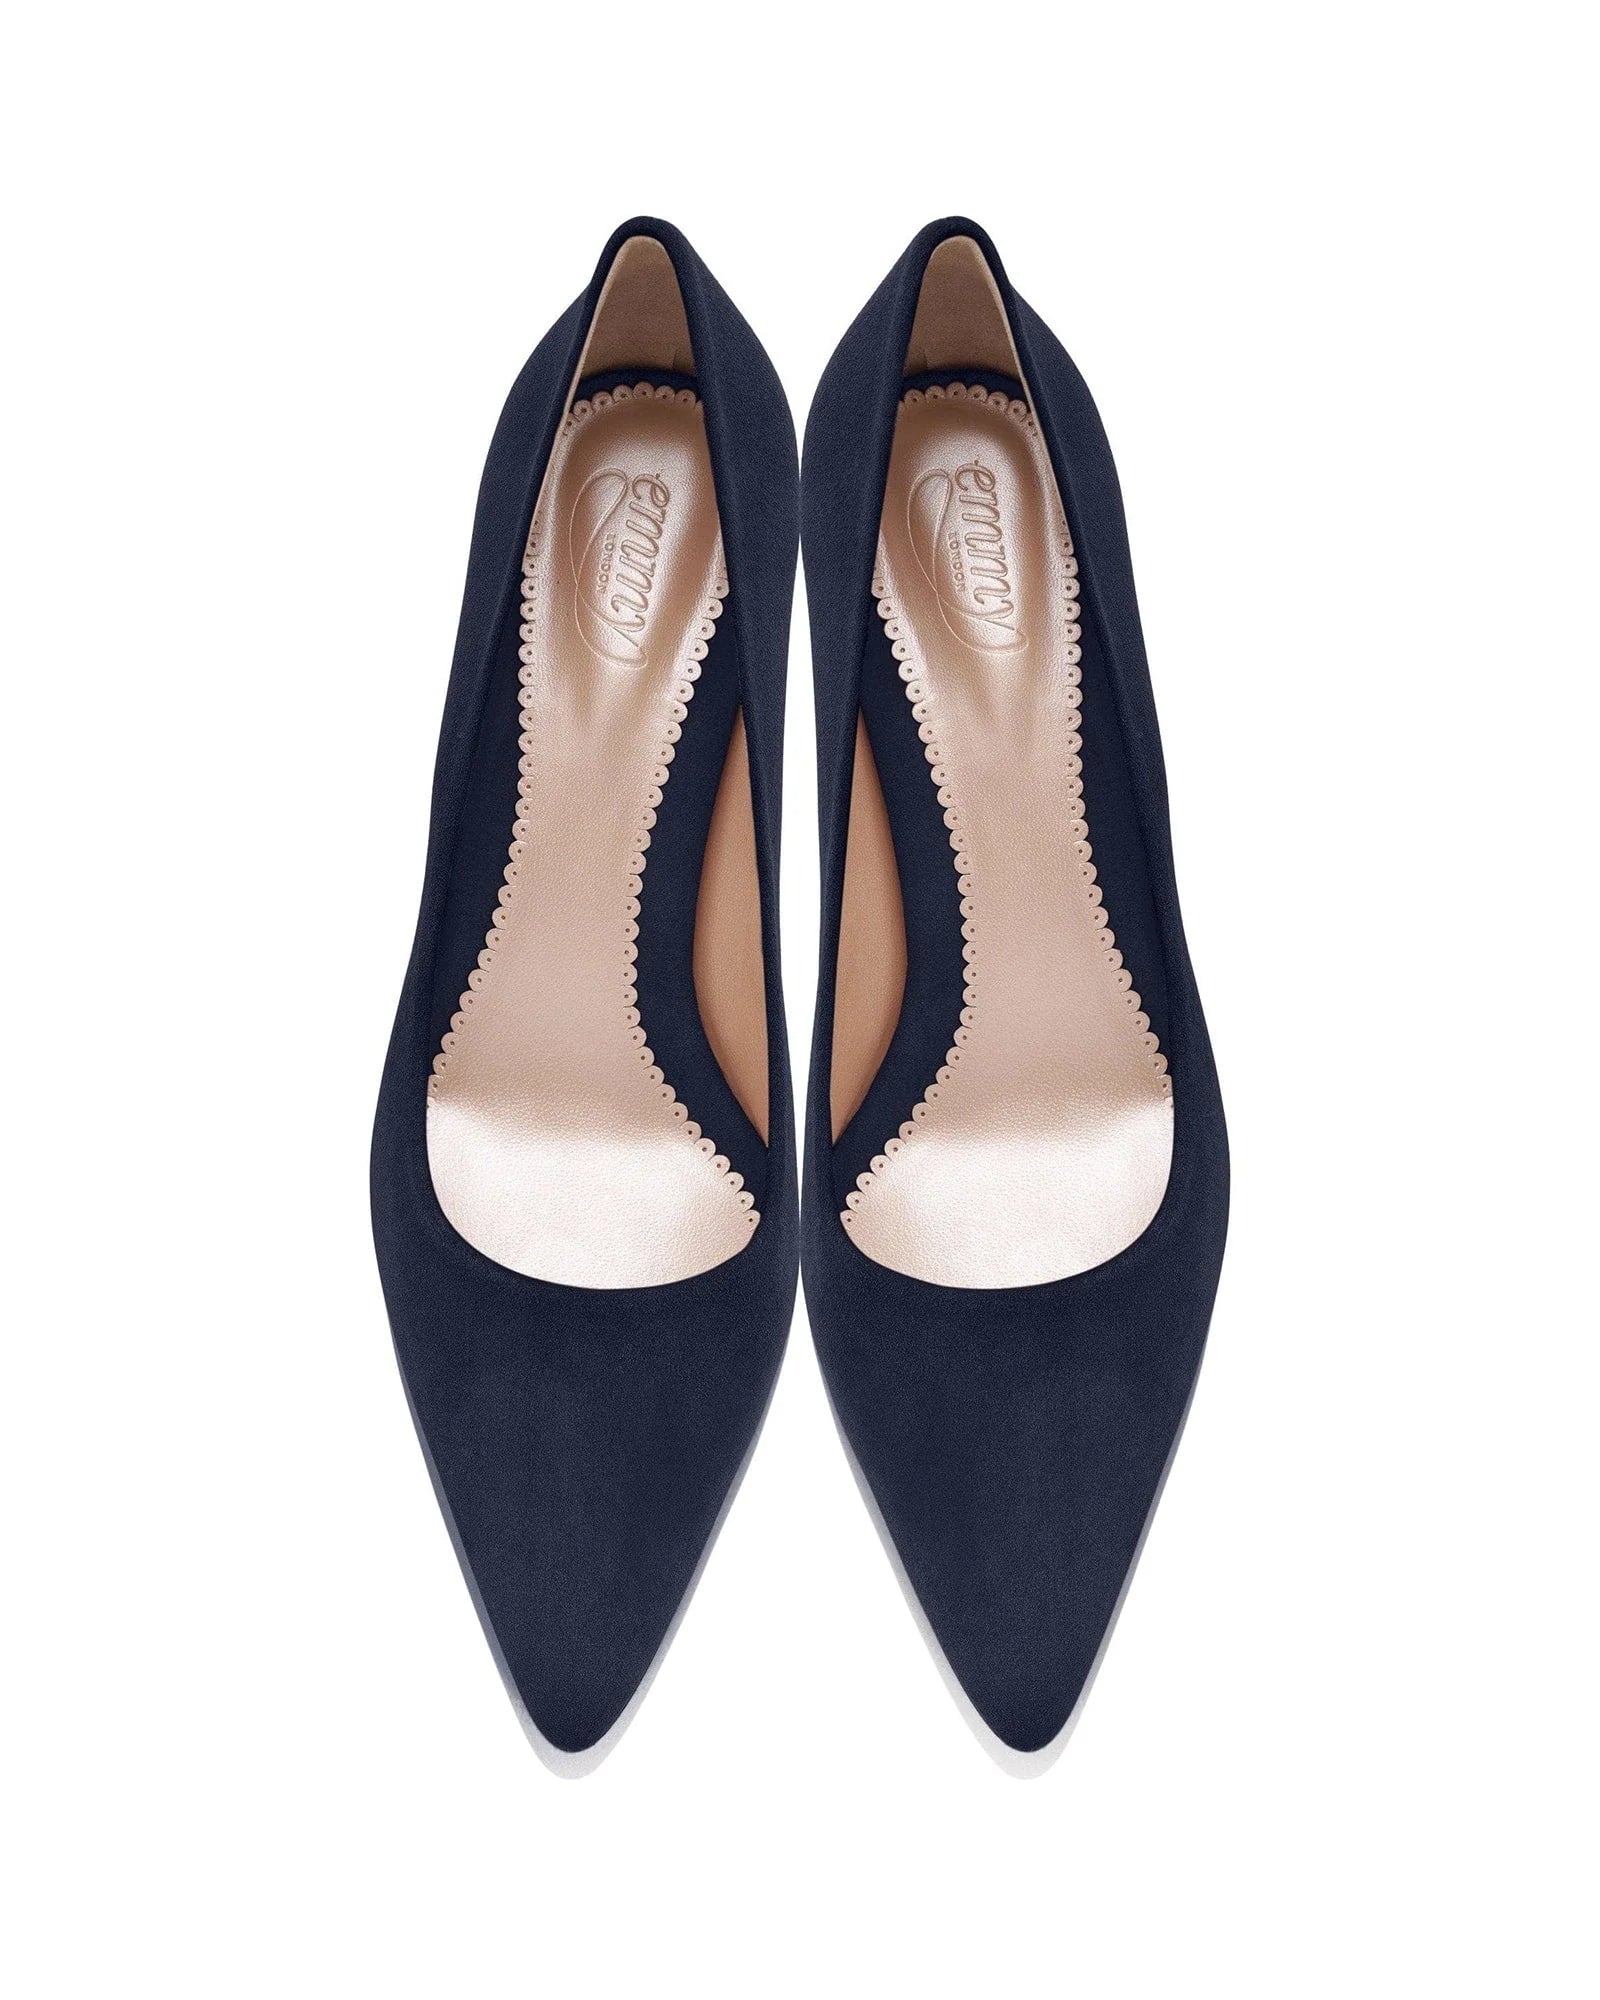 Claudia Mid Heel Fashion Shoe Navy Blue Court Shoes  image